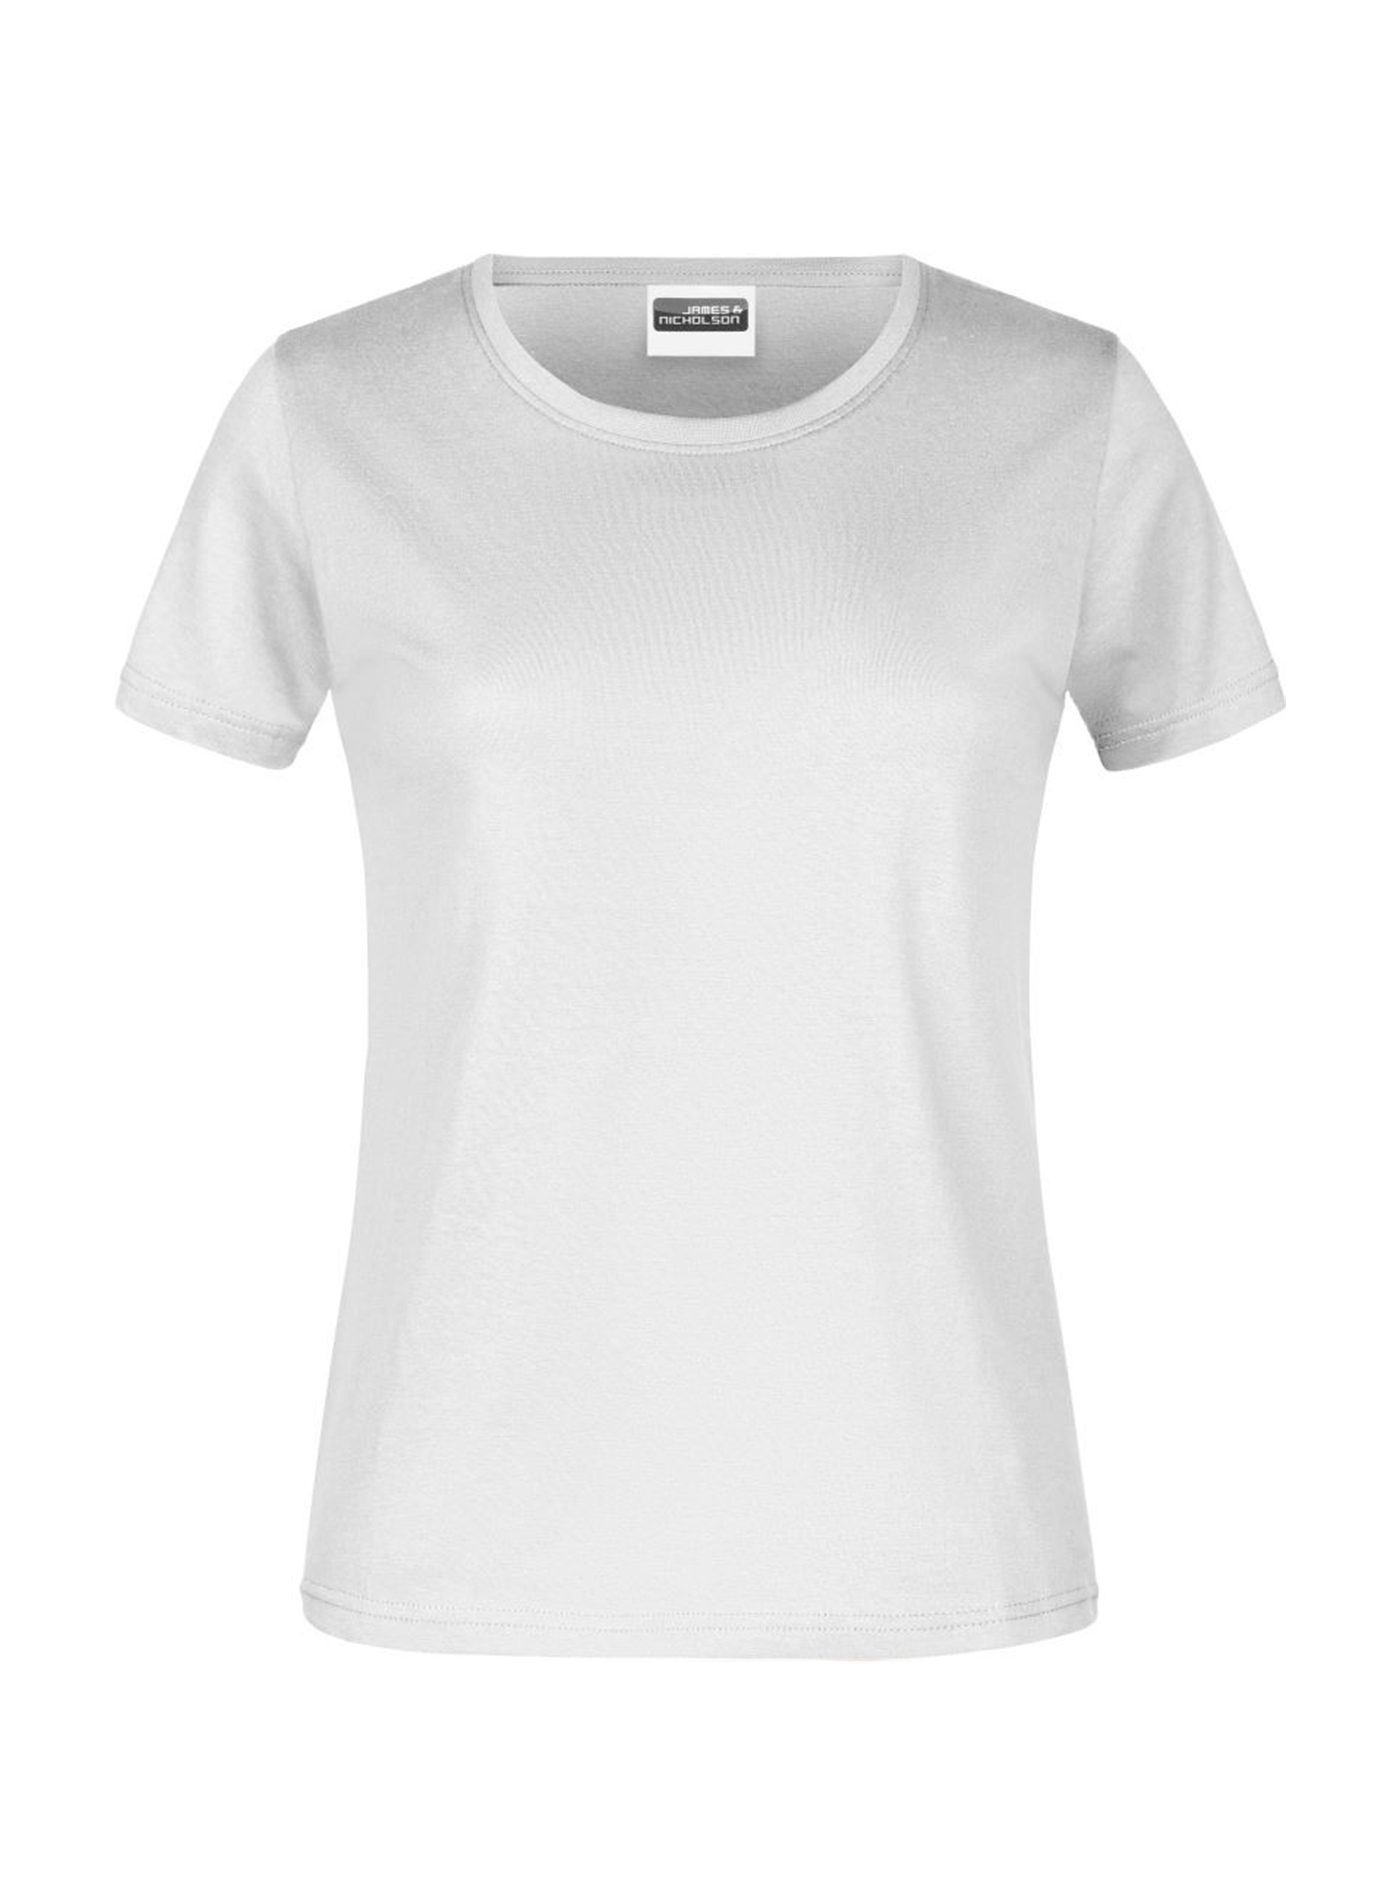 Dámské tričko James & Nicholson basic - Bílá L